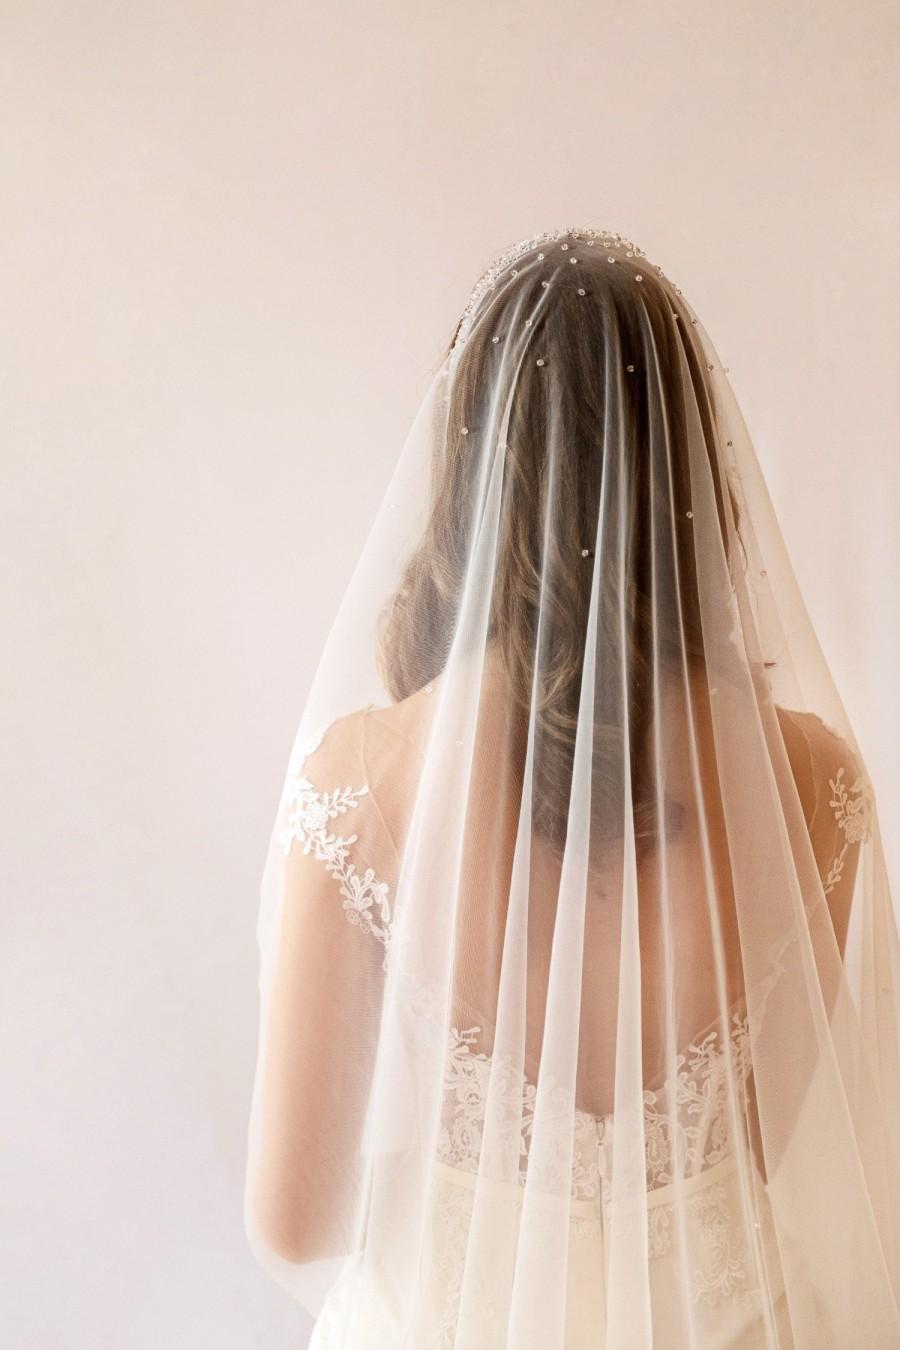 Wedding - Juliet cap wedding veil, vintage veil, crystal detailed veil - romantic wedding veil-Chapel length veil